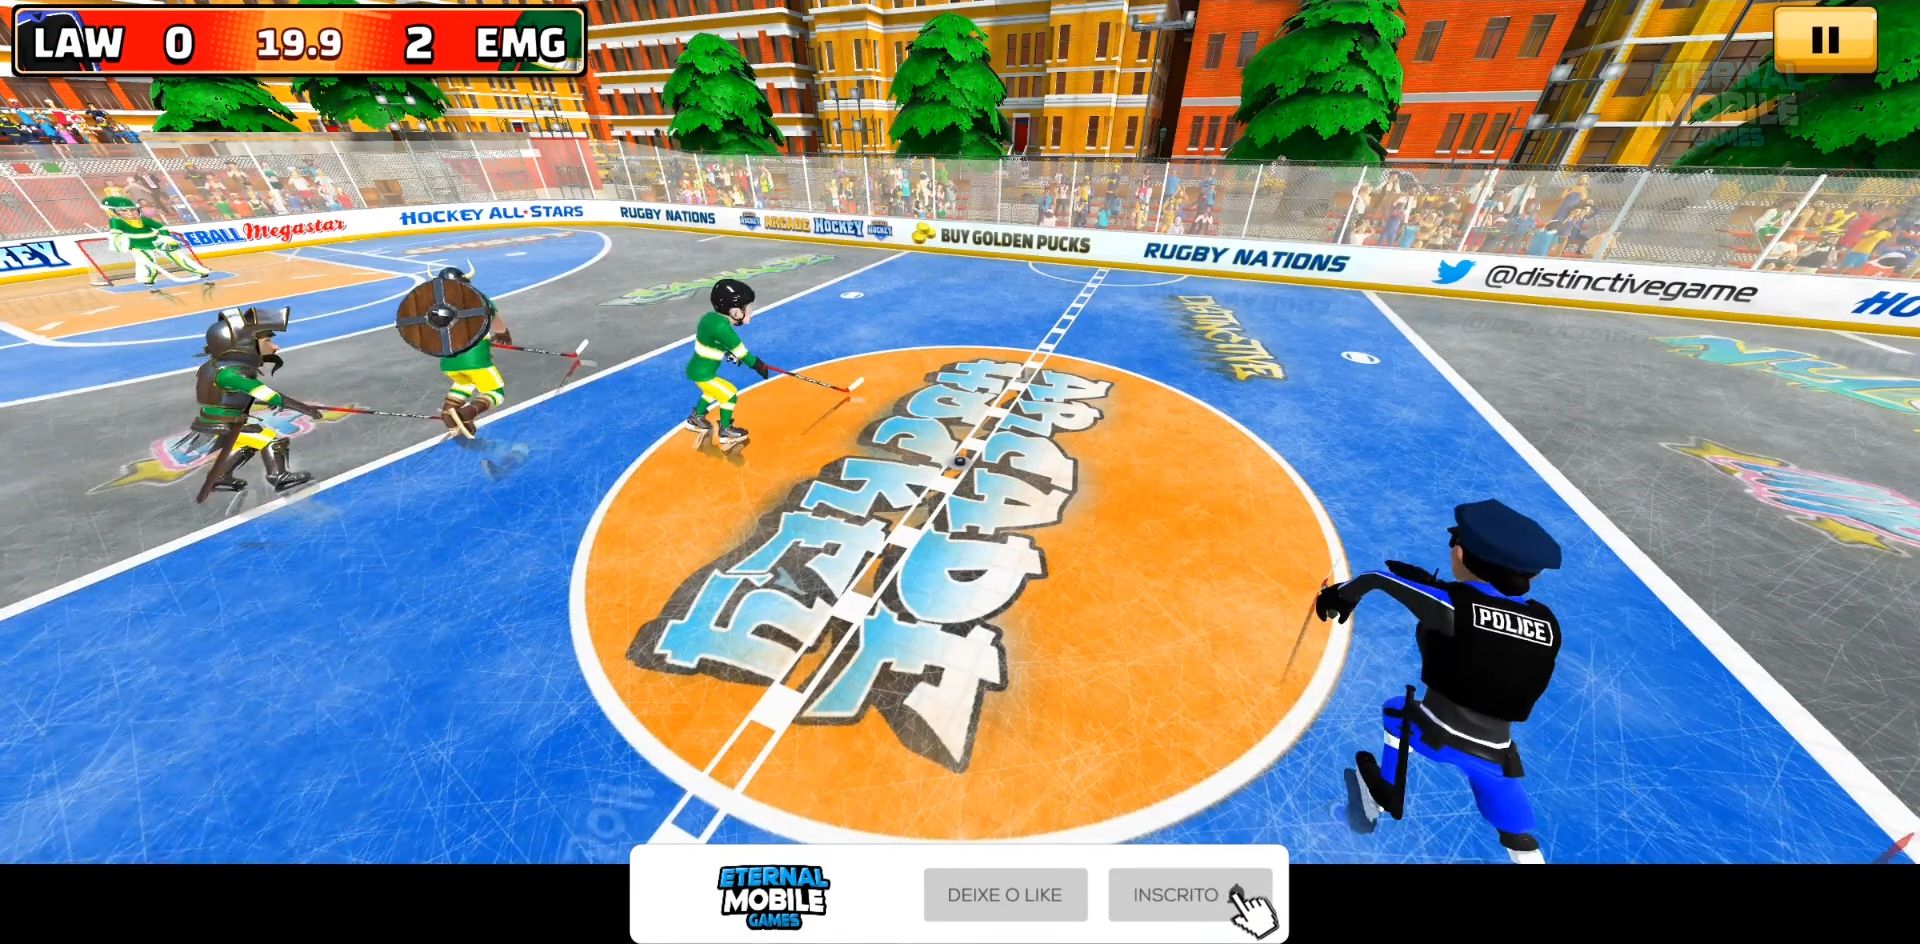 Arcade Hockey 21 captura de pantalla 1